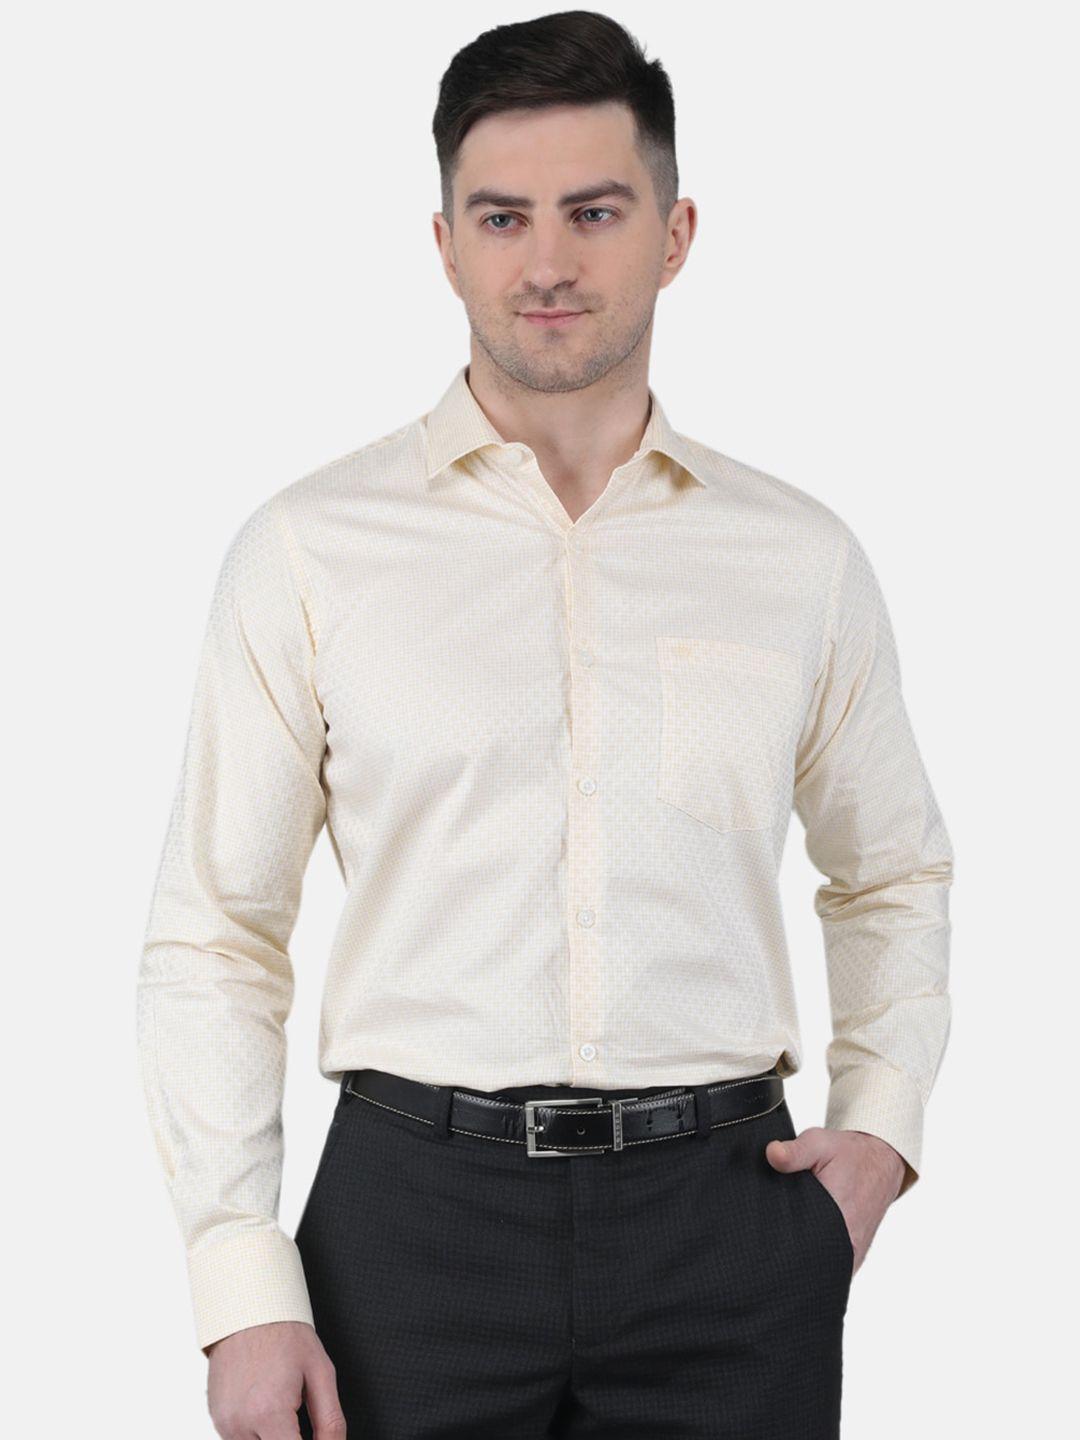 monte carlo straight micro checked cotton formal shirt